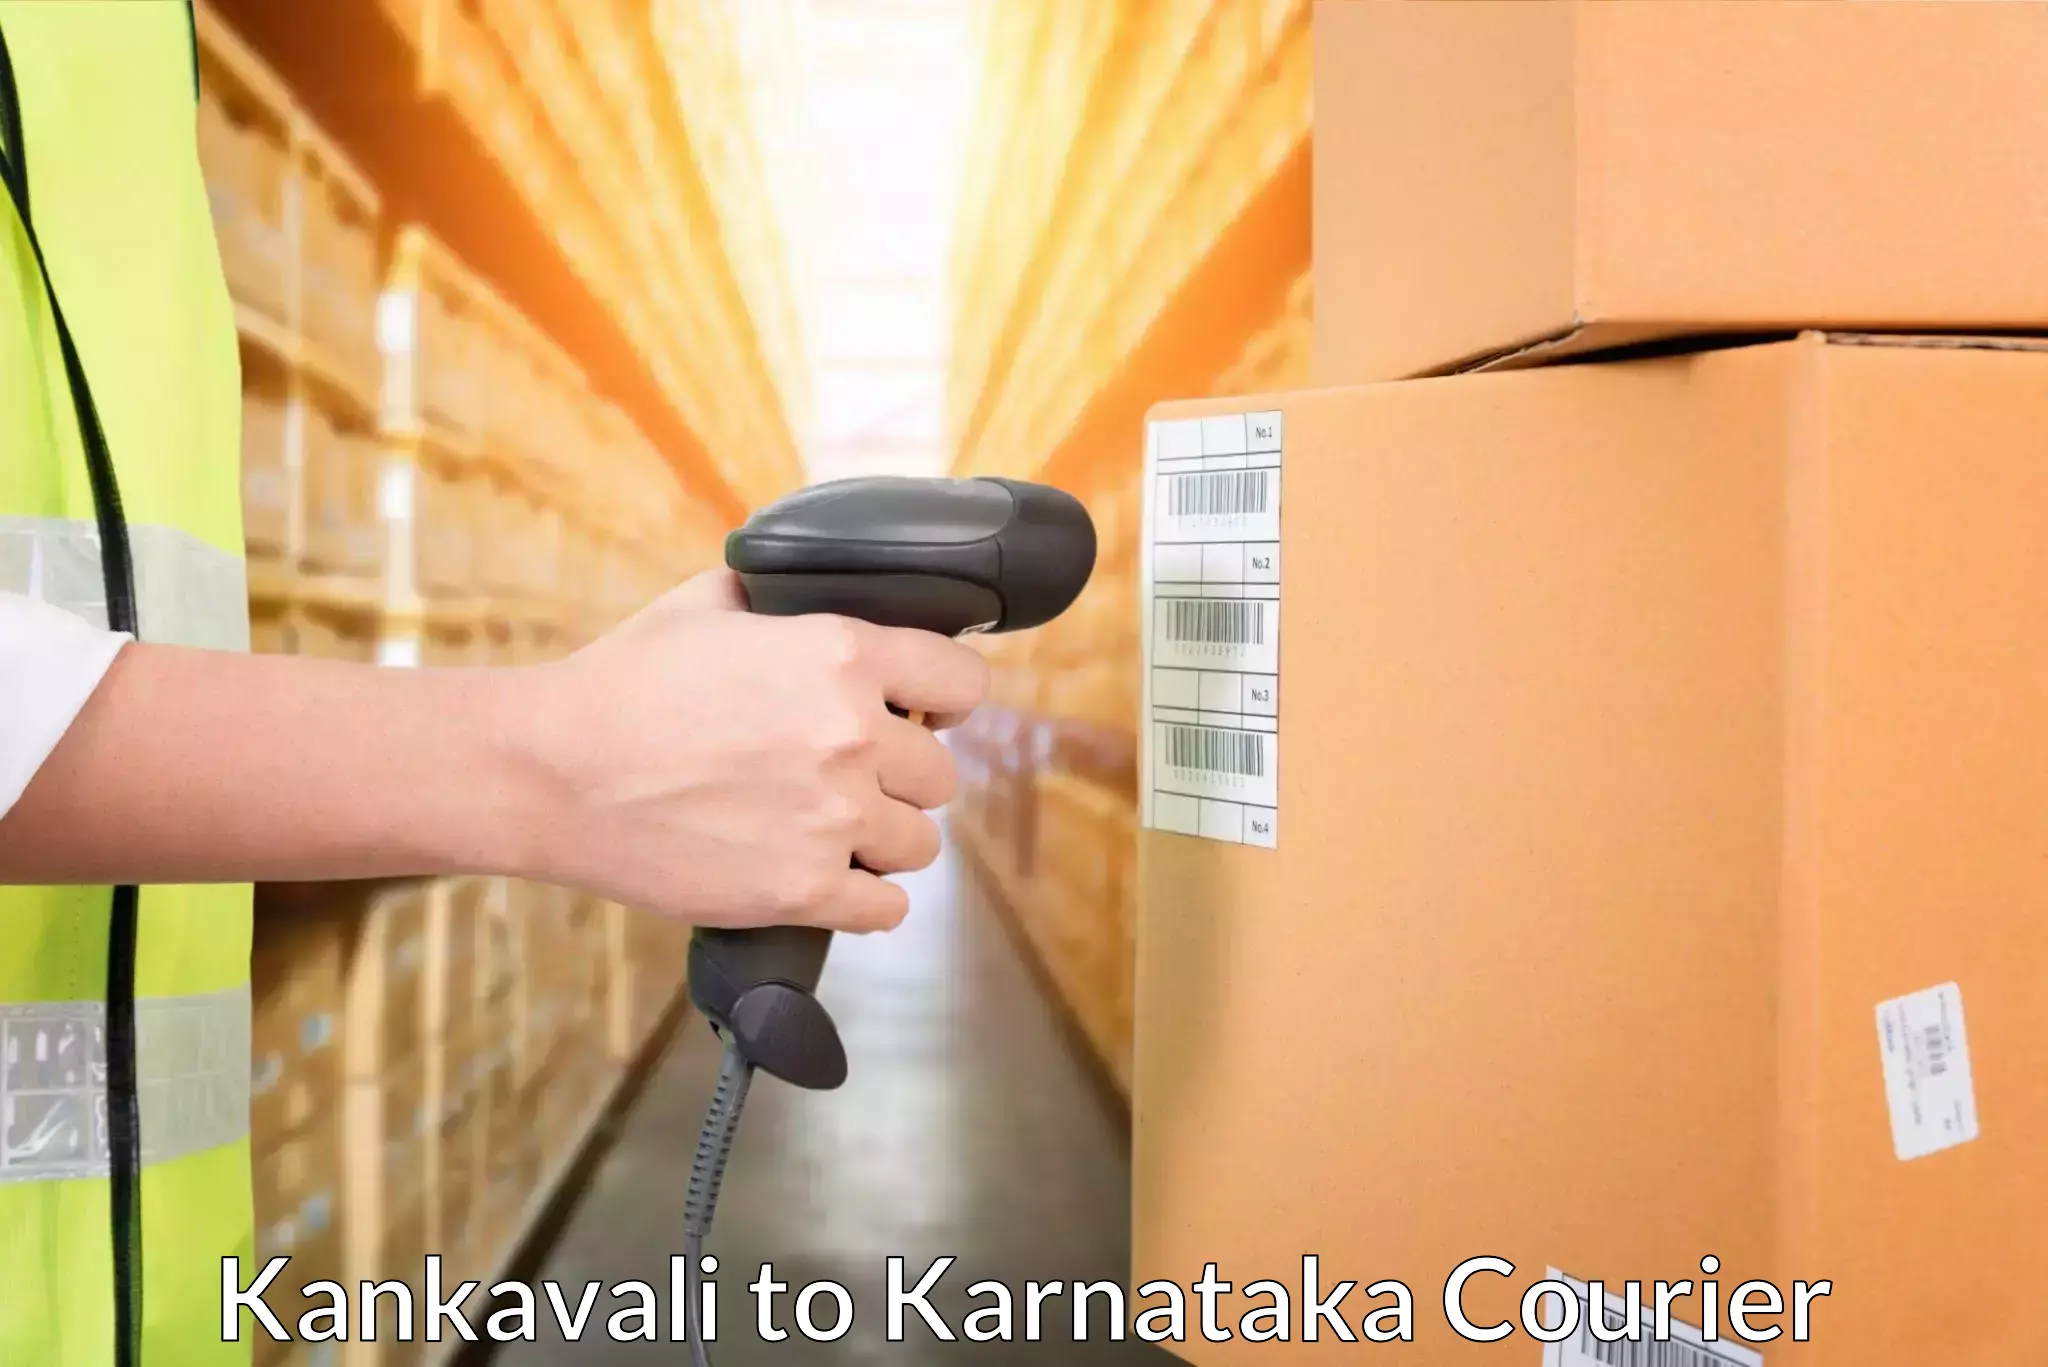 End-to-end delivery Kankavali to Karnataka